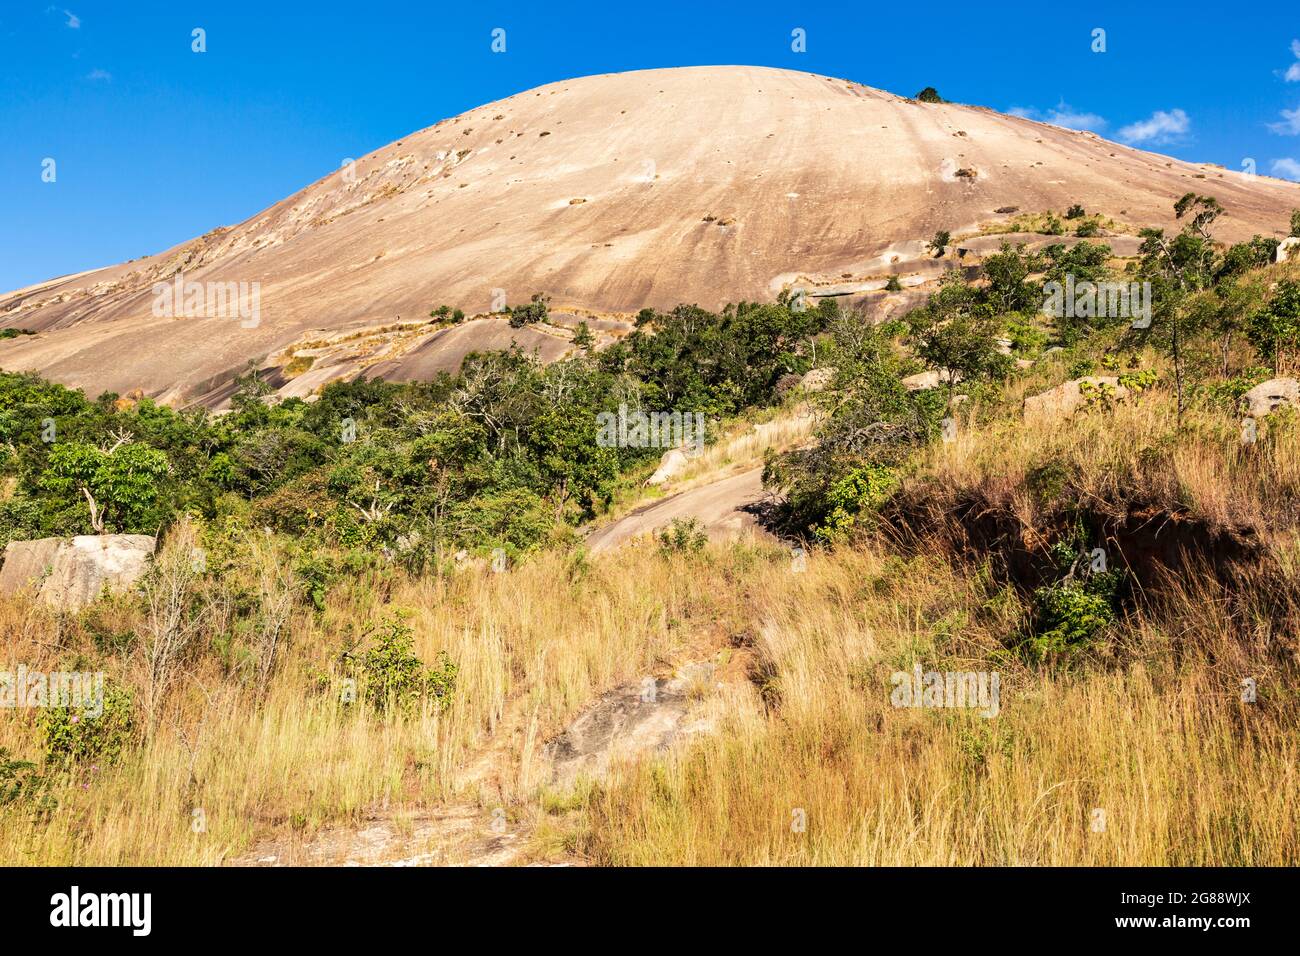 Sibebe mountain near Mbabane, the capital city of Swaziland, Eswatini Stock Photo